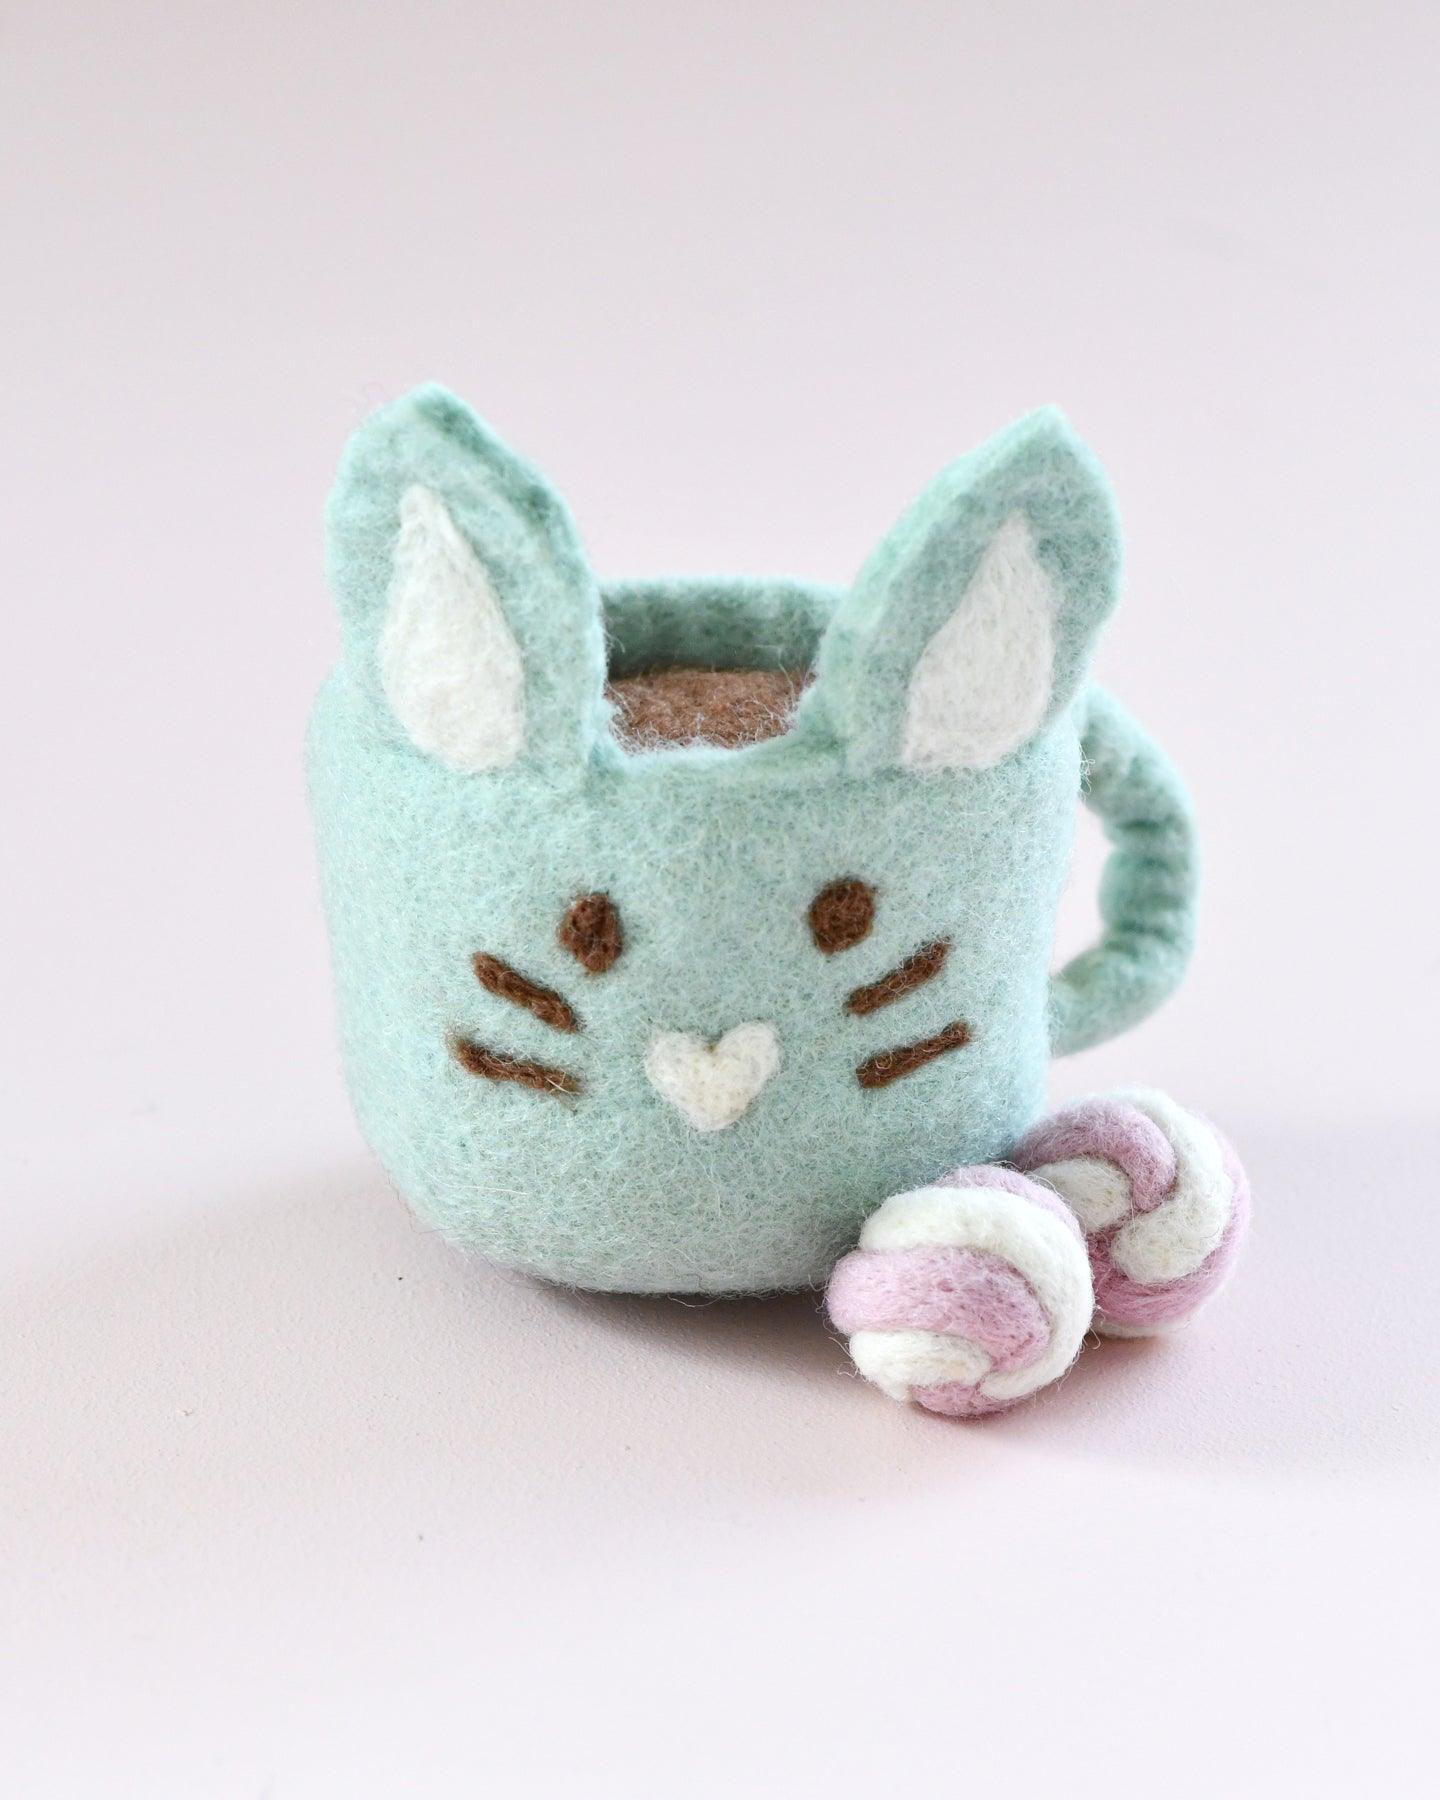 Felt Bunny Hot Chocolate Mug with Marshmallows (Mint Green Cup)